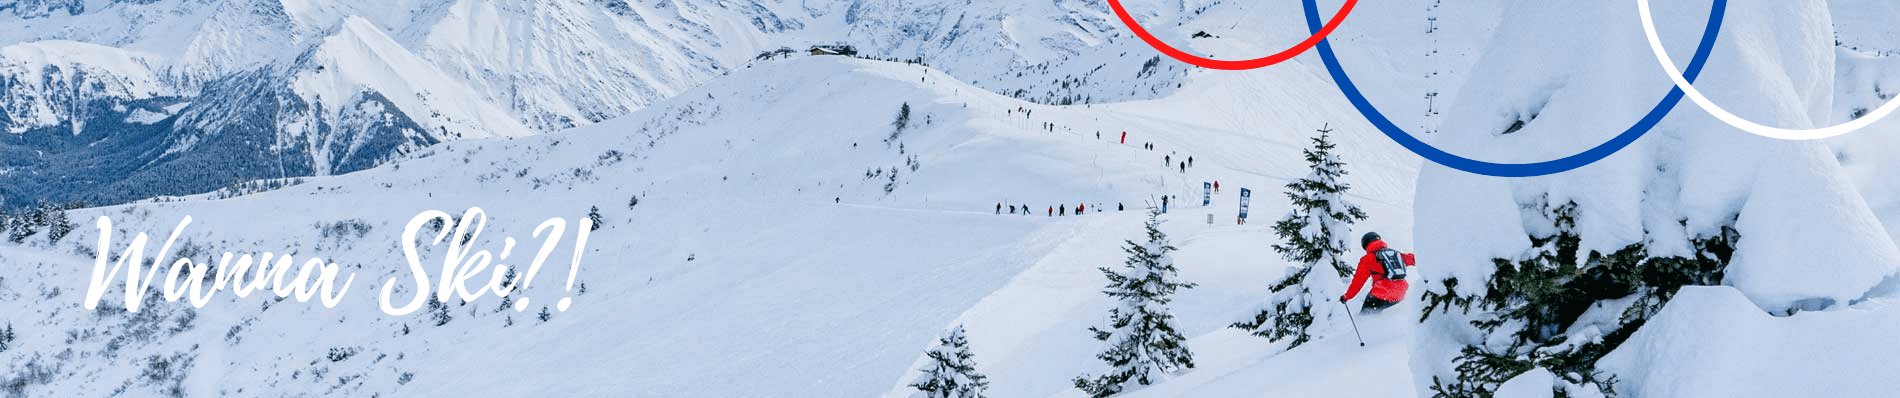 BANNER 1900 x 400 wintersport ski frankrijk